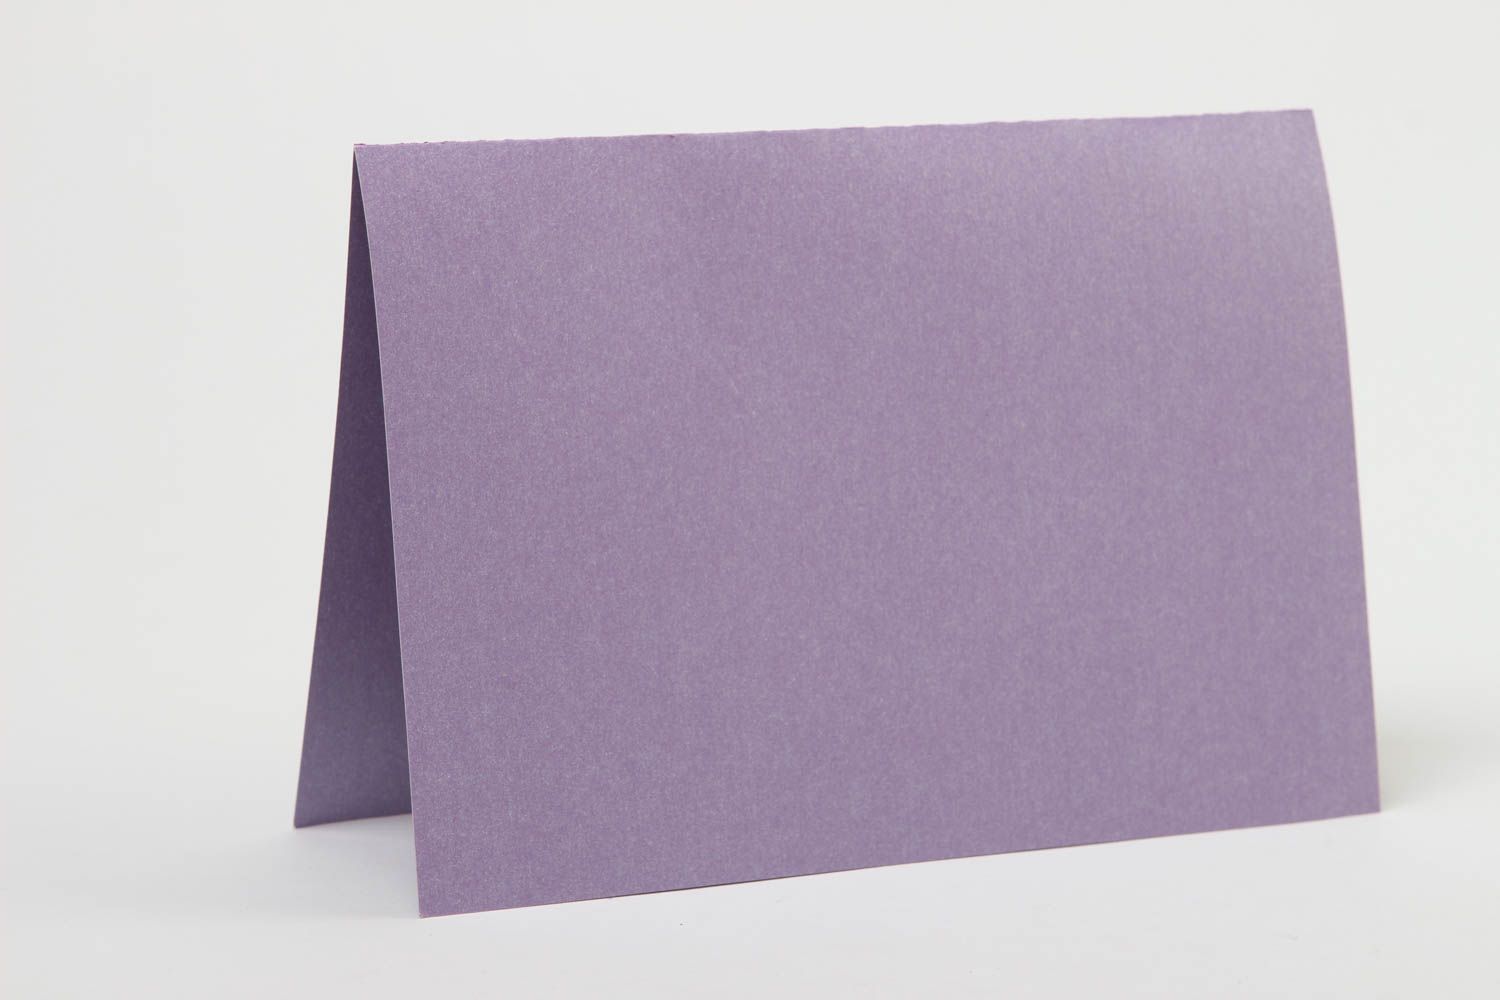 Handmade schöne Grusskarten Scrapbook Karten Papier Karten rechteckig violett foto 4